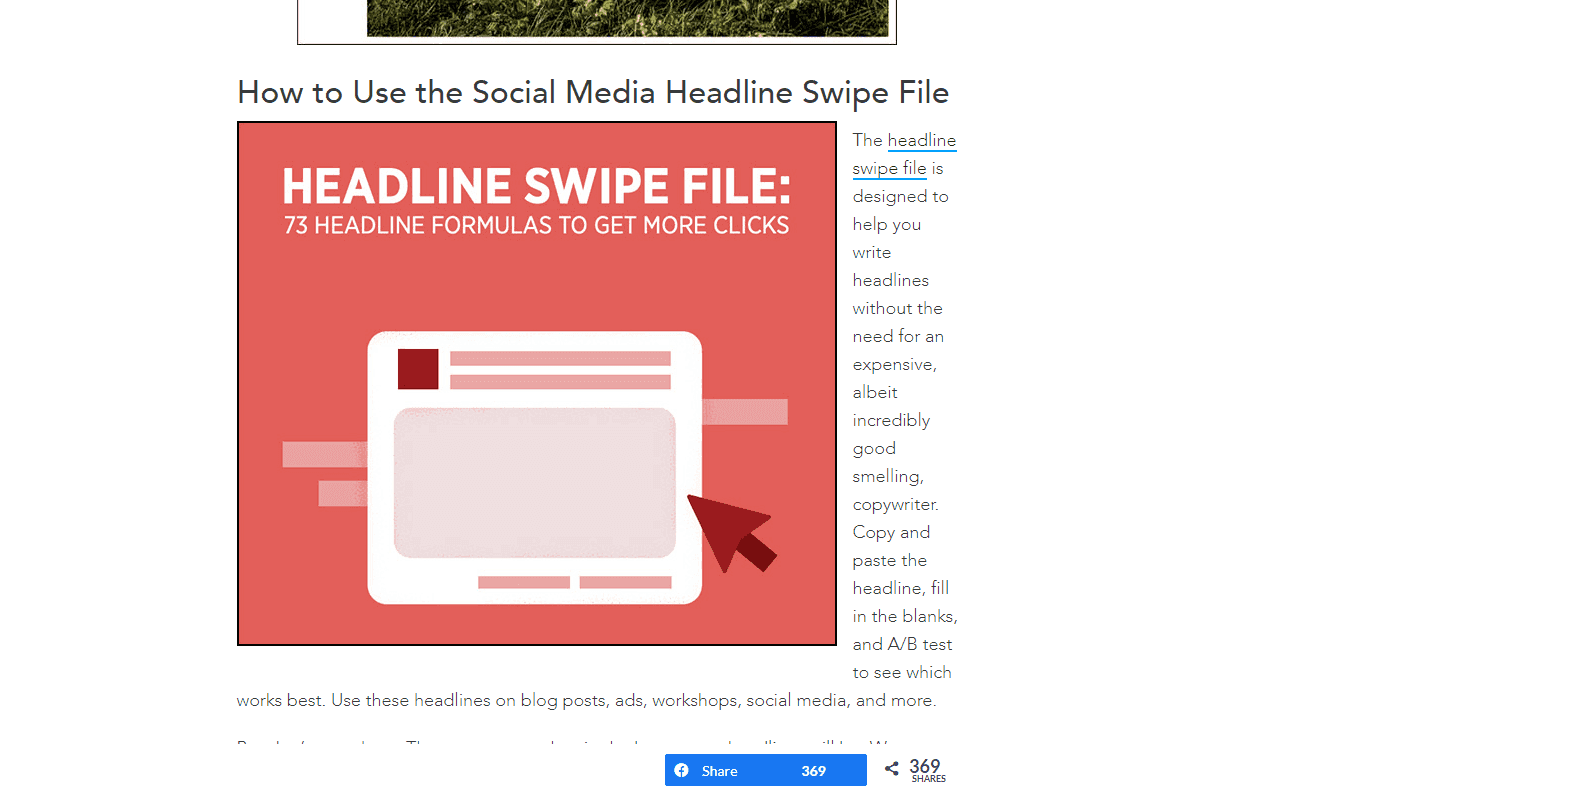 Swipe file example from Digital Marketer